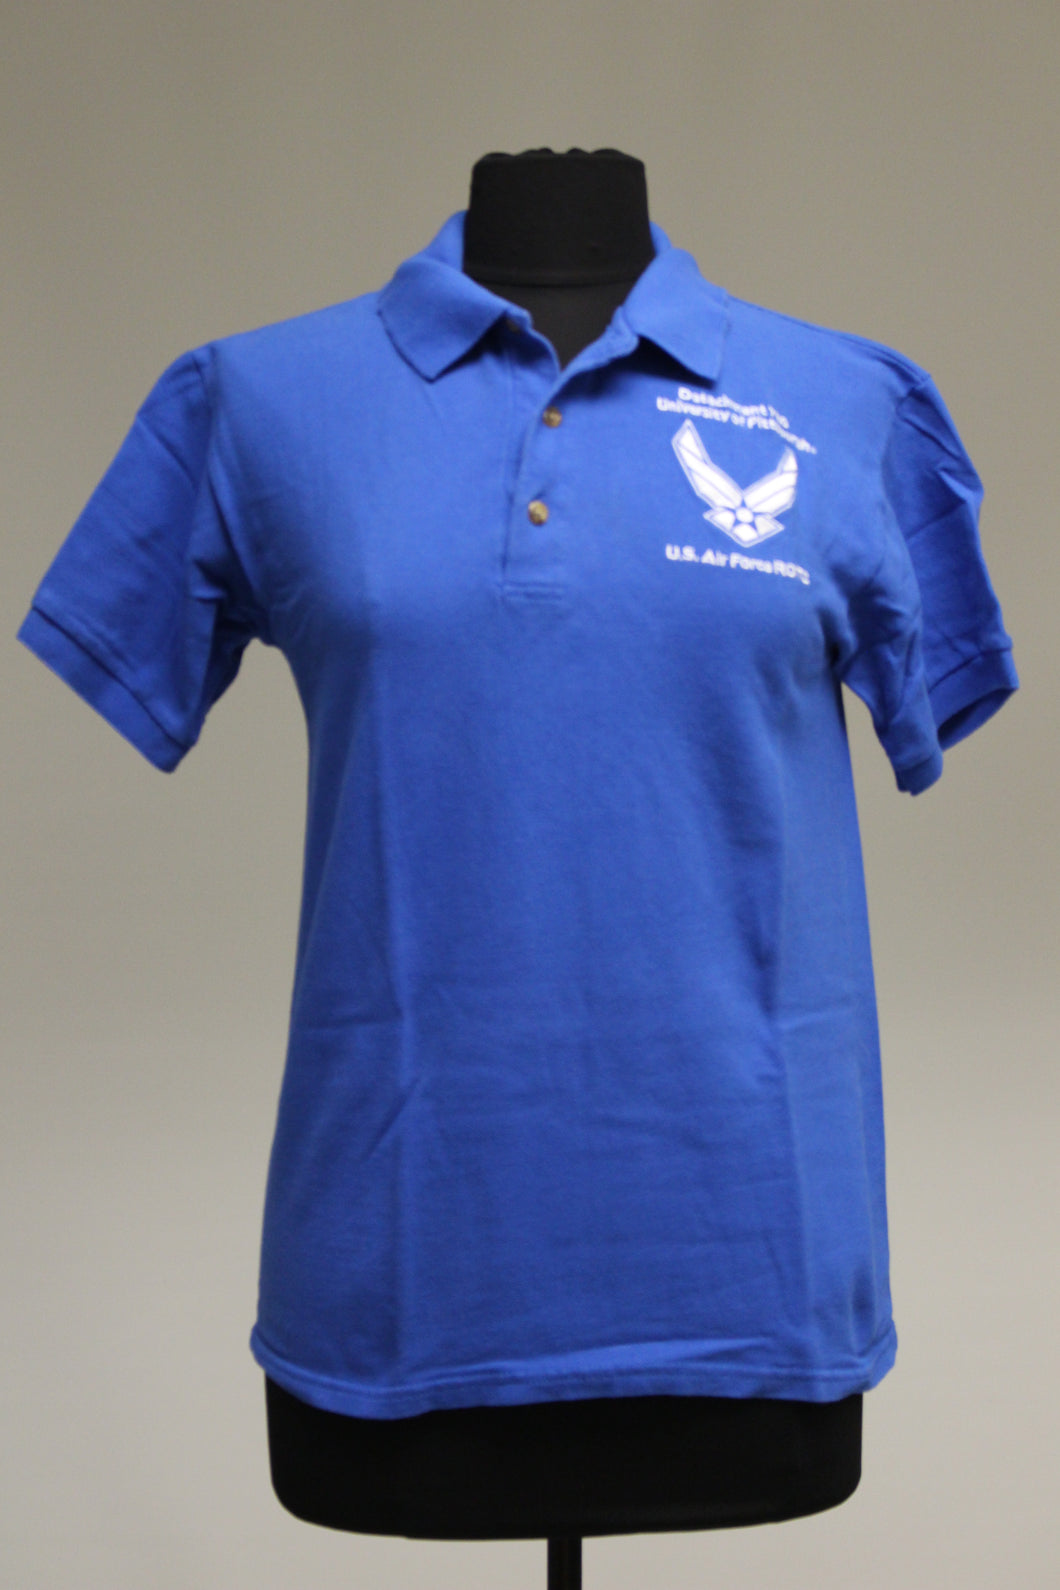 University of Pittsburgh US AF ROTC Polo Shirt, Small, Royal Blue